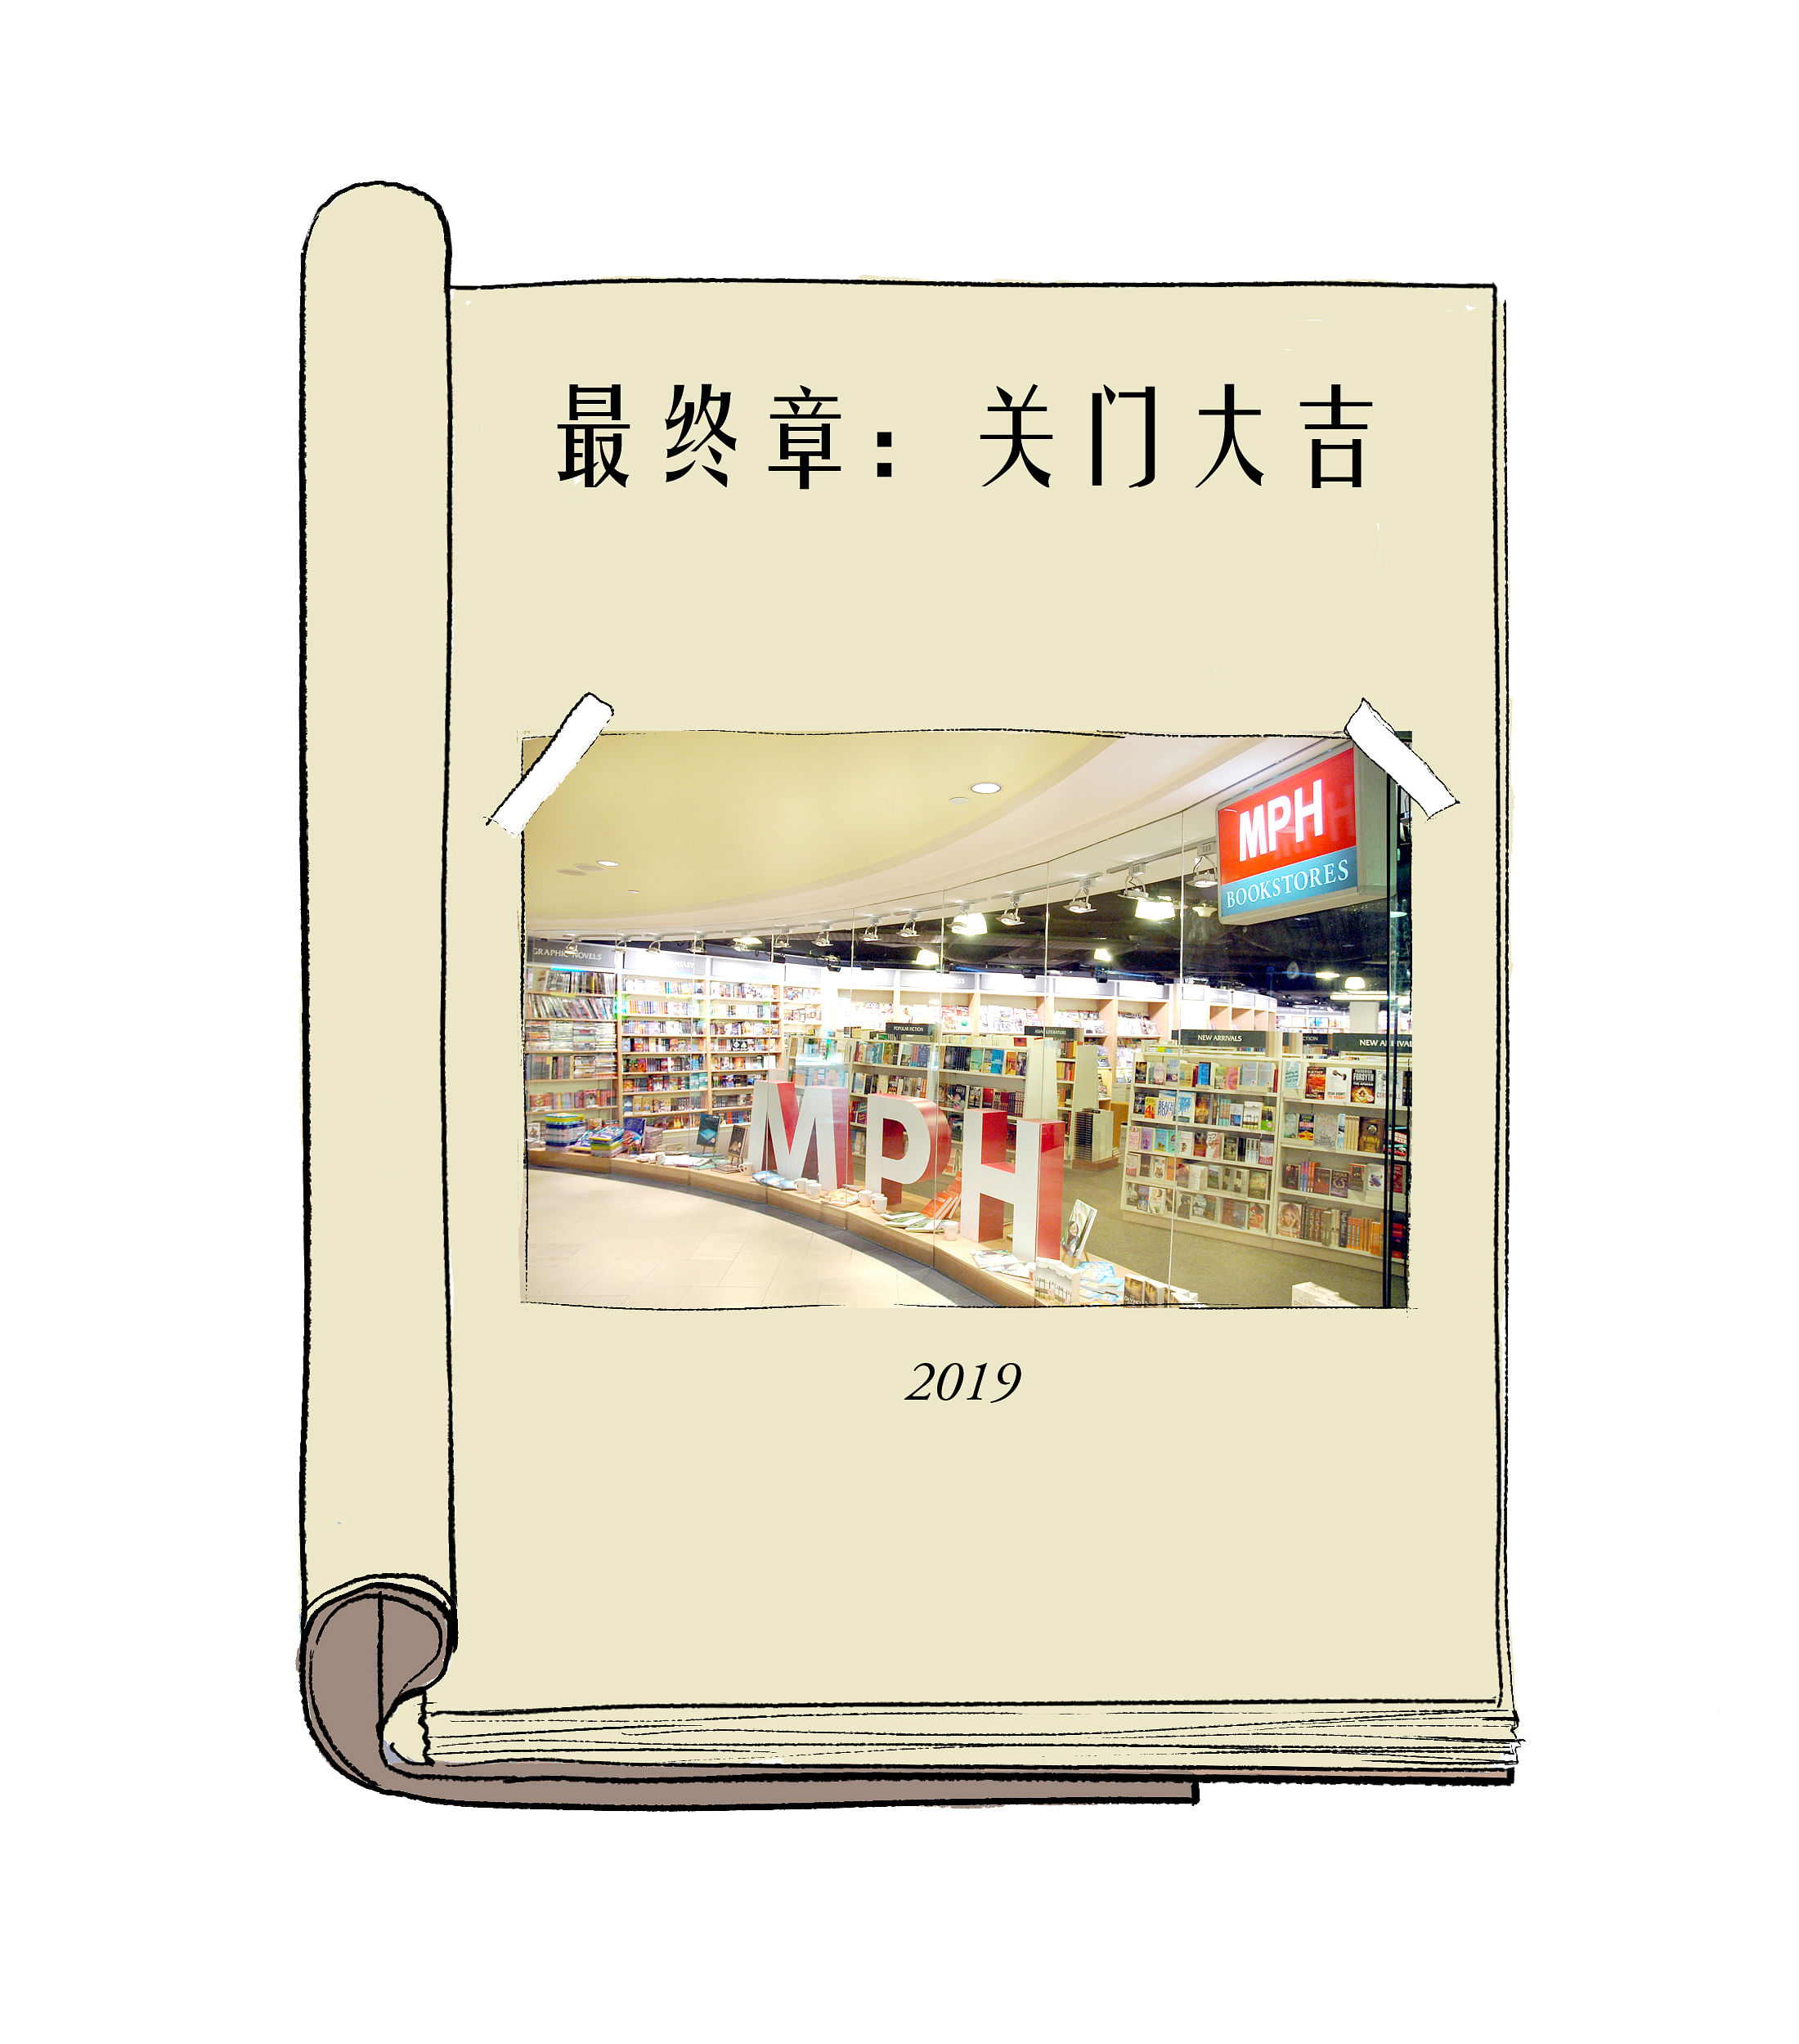 20190712_singapore_mph-bookstore-closing-06-mobile.jpg